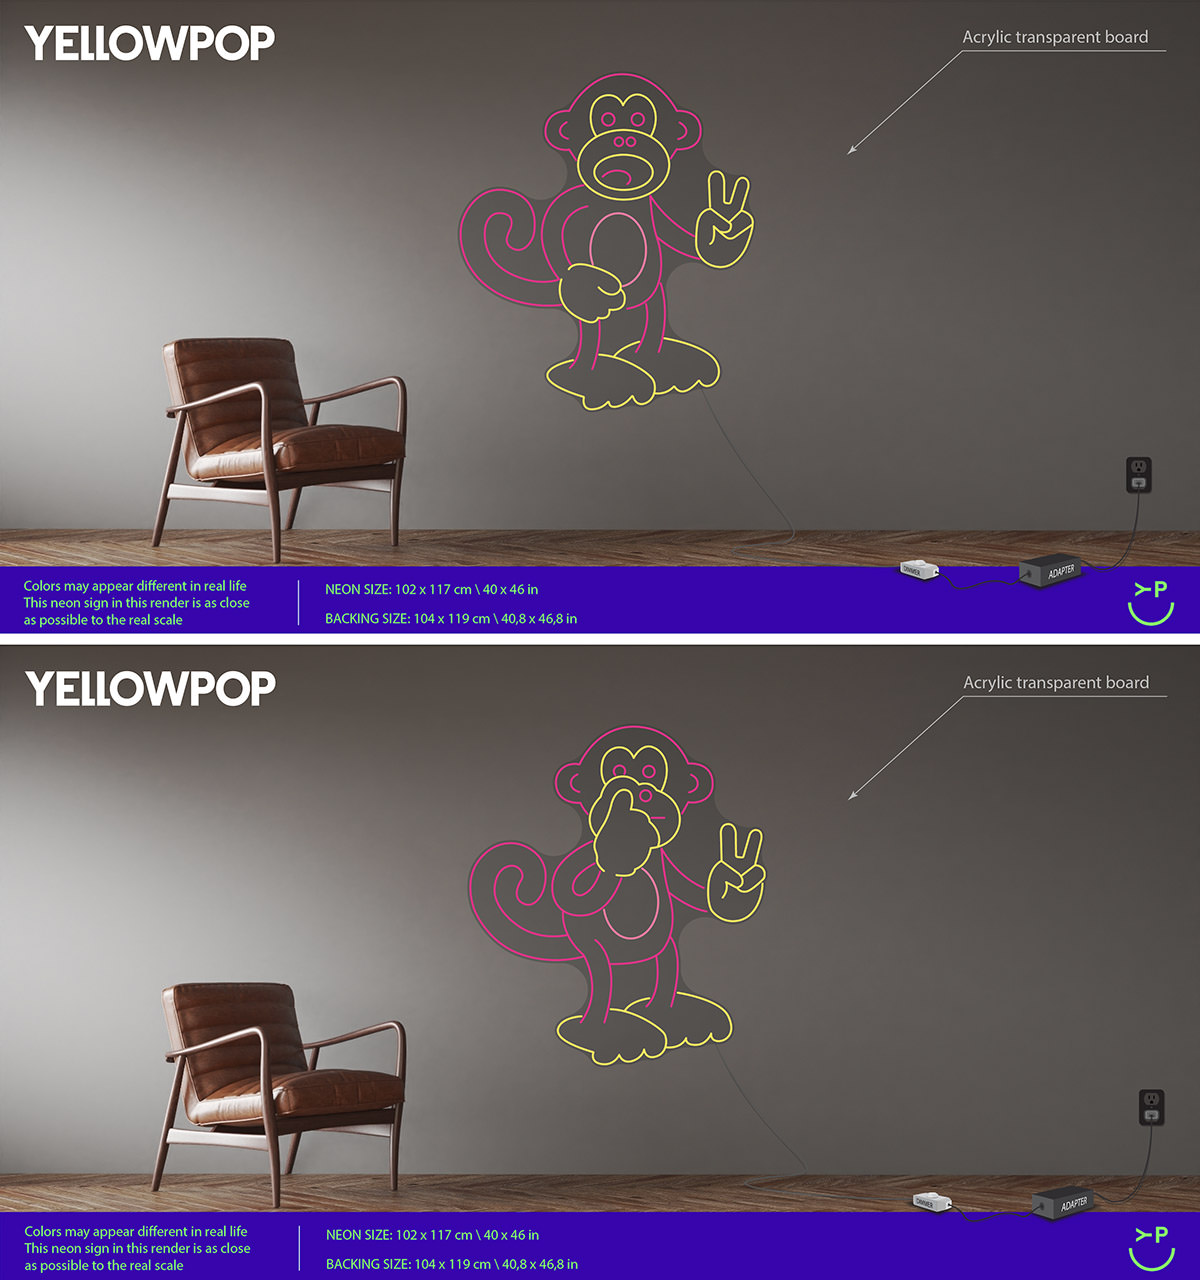 A YellowPop rendering of my Bad Monkey Neon.